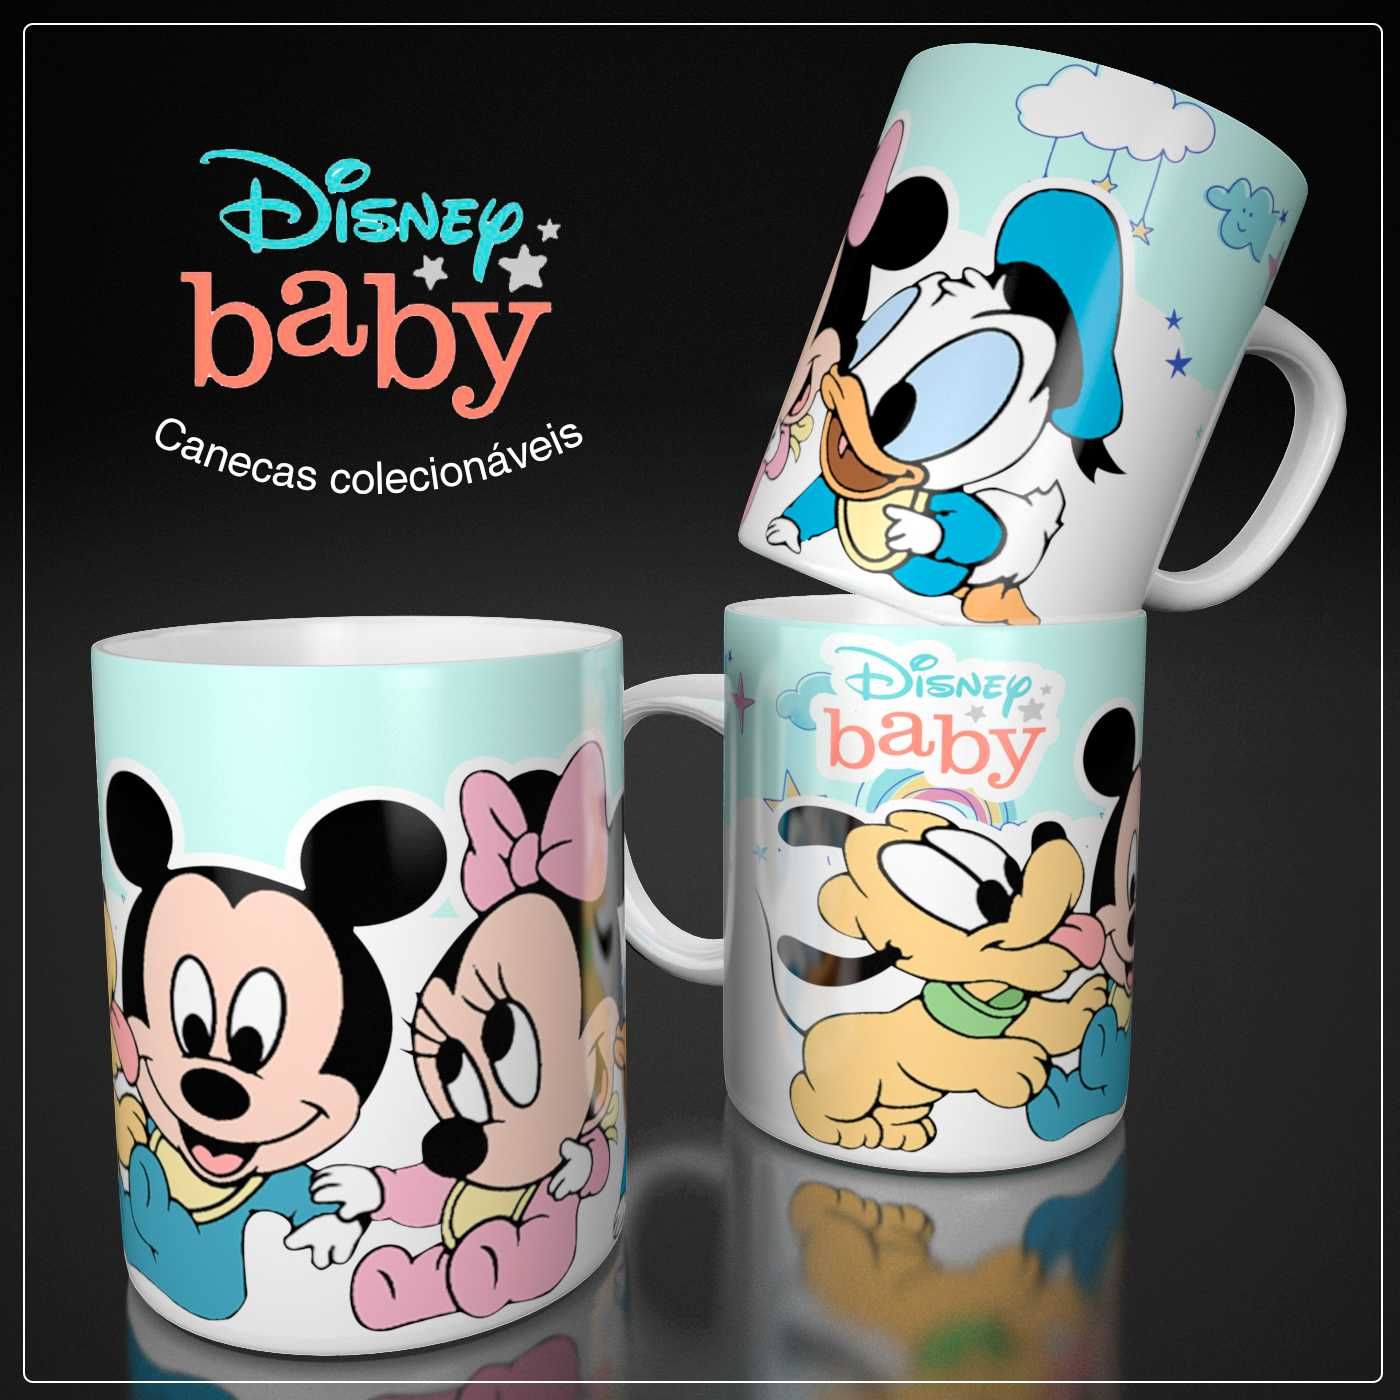 Canecas Personalizadas - Disney Baby